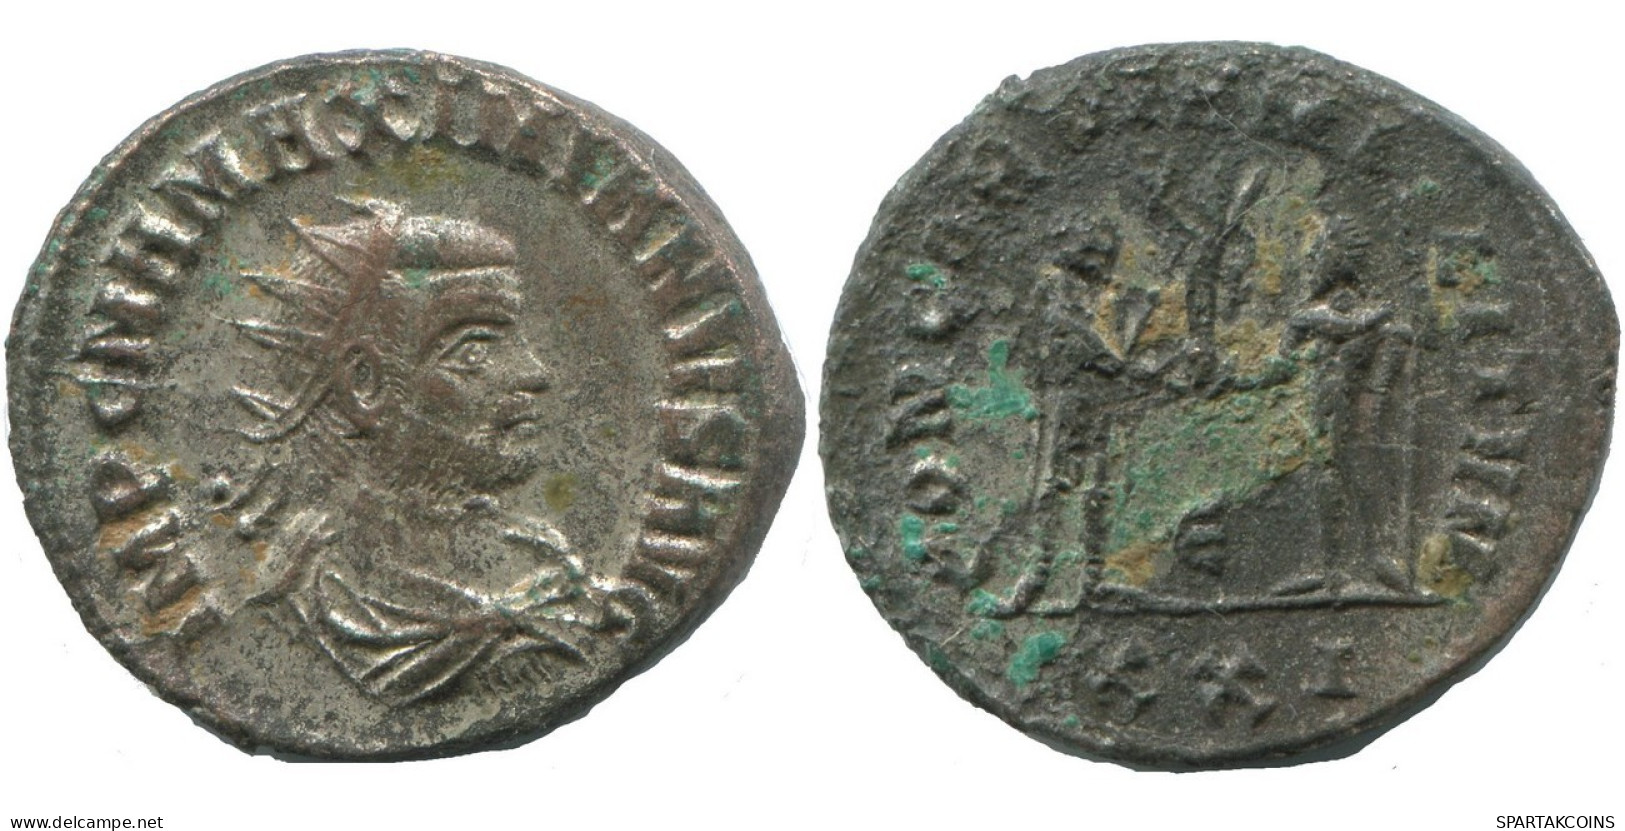 MAXIMIANUS CYZICUS E XXI AD293 SILVERED LATE ROMAN COIN 4.1g/22mm #ANT2671.41.U.A - The Tetrarchy (284 AD To 307 AD)